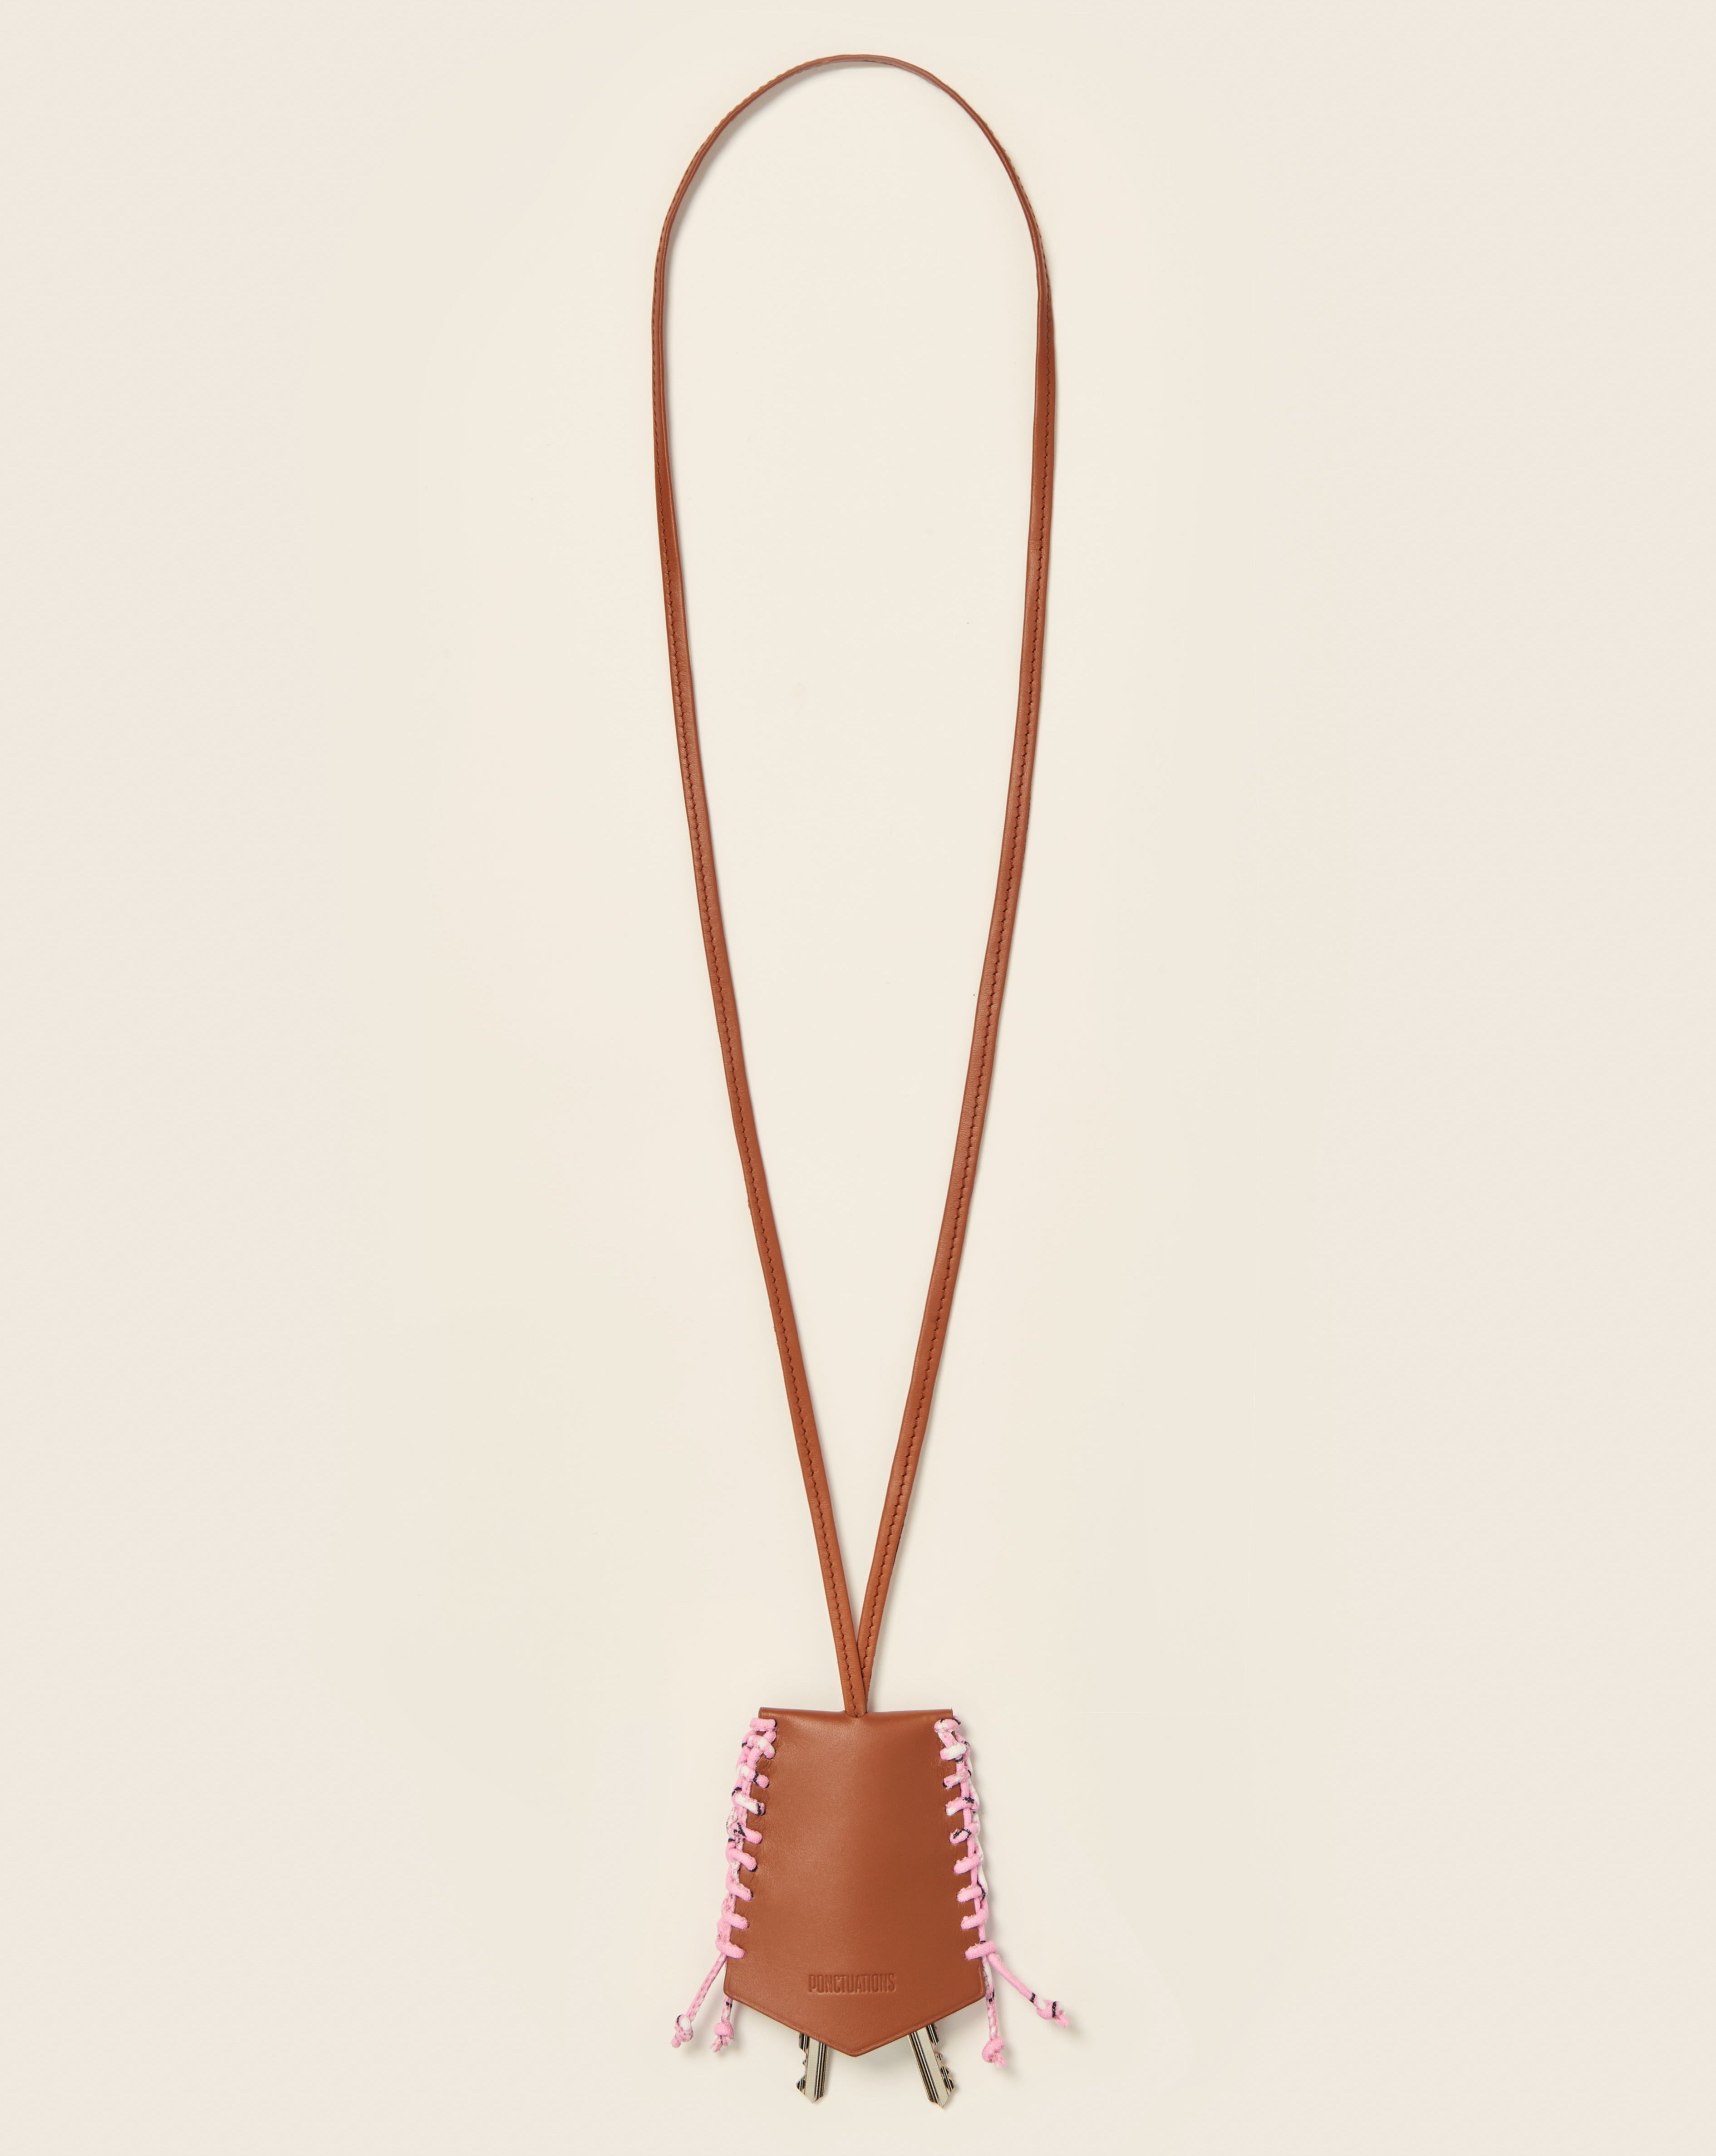 FUJI - Bell key ring necklace - Gold leather & Bandana pink